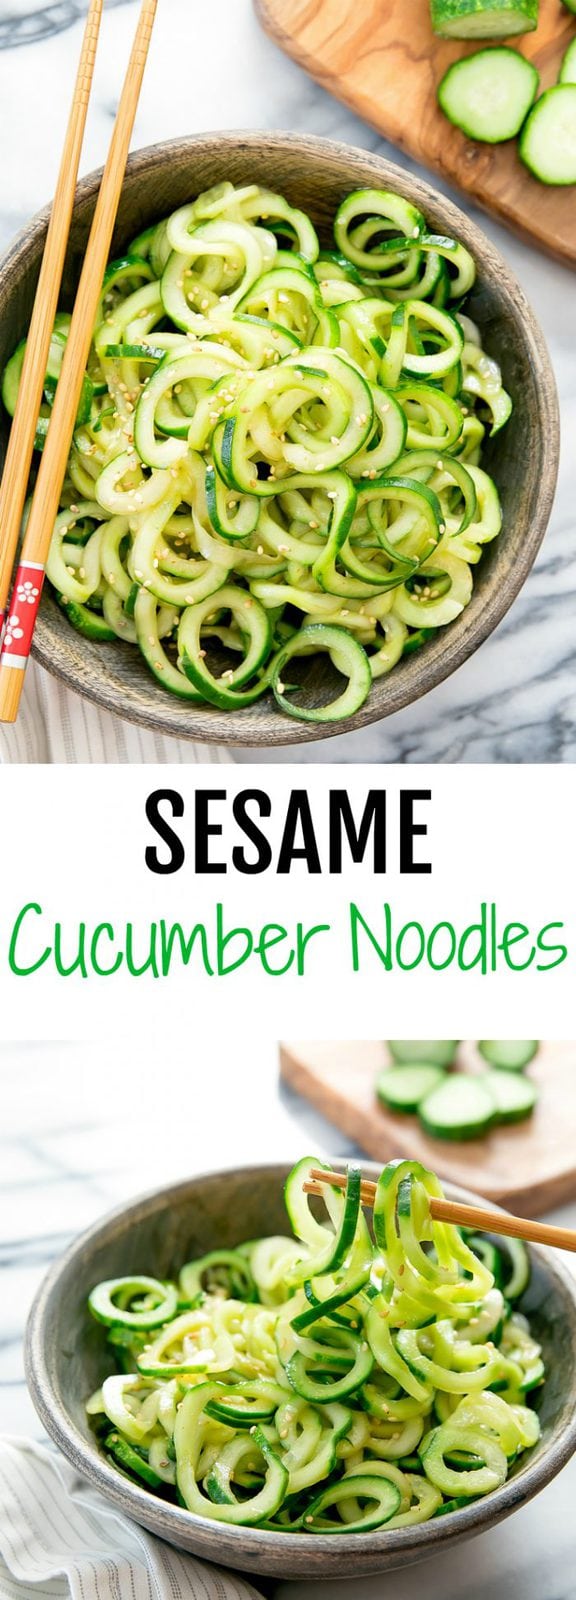 Sesame Cucumber Noodles